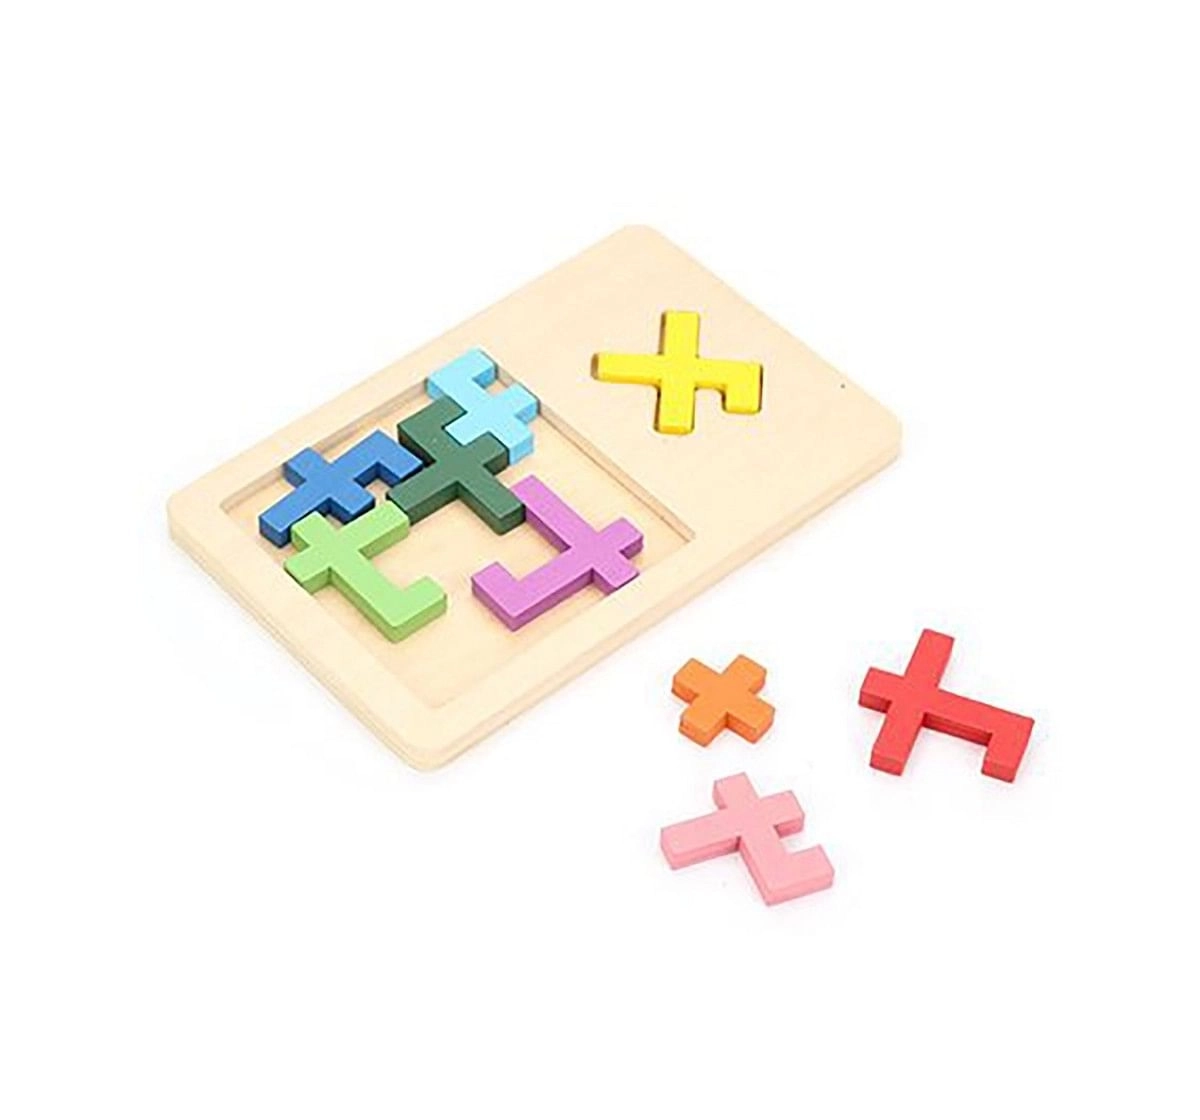 Mi Wooden Reunion Puzzle, Multi Color Games for Kids age 6Y+ 